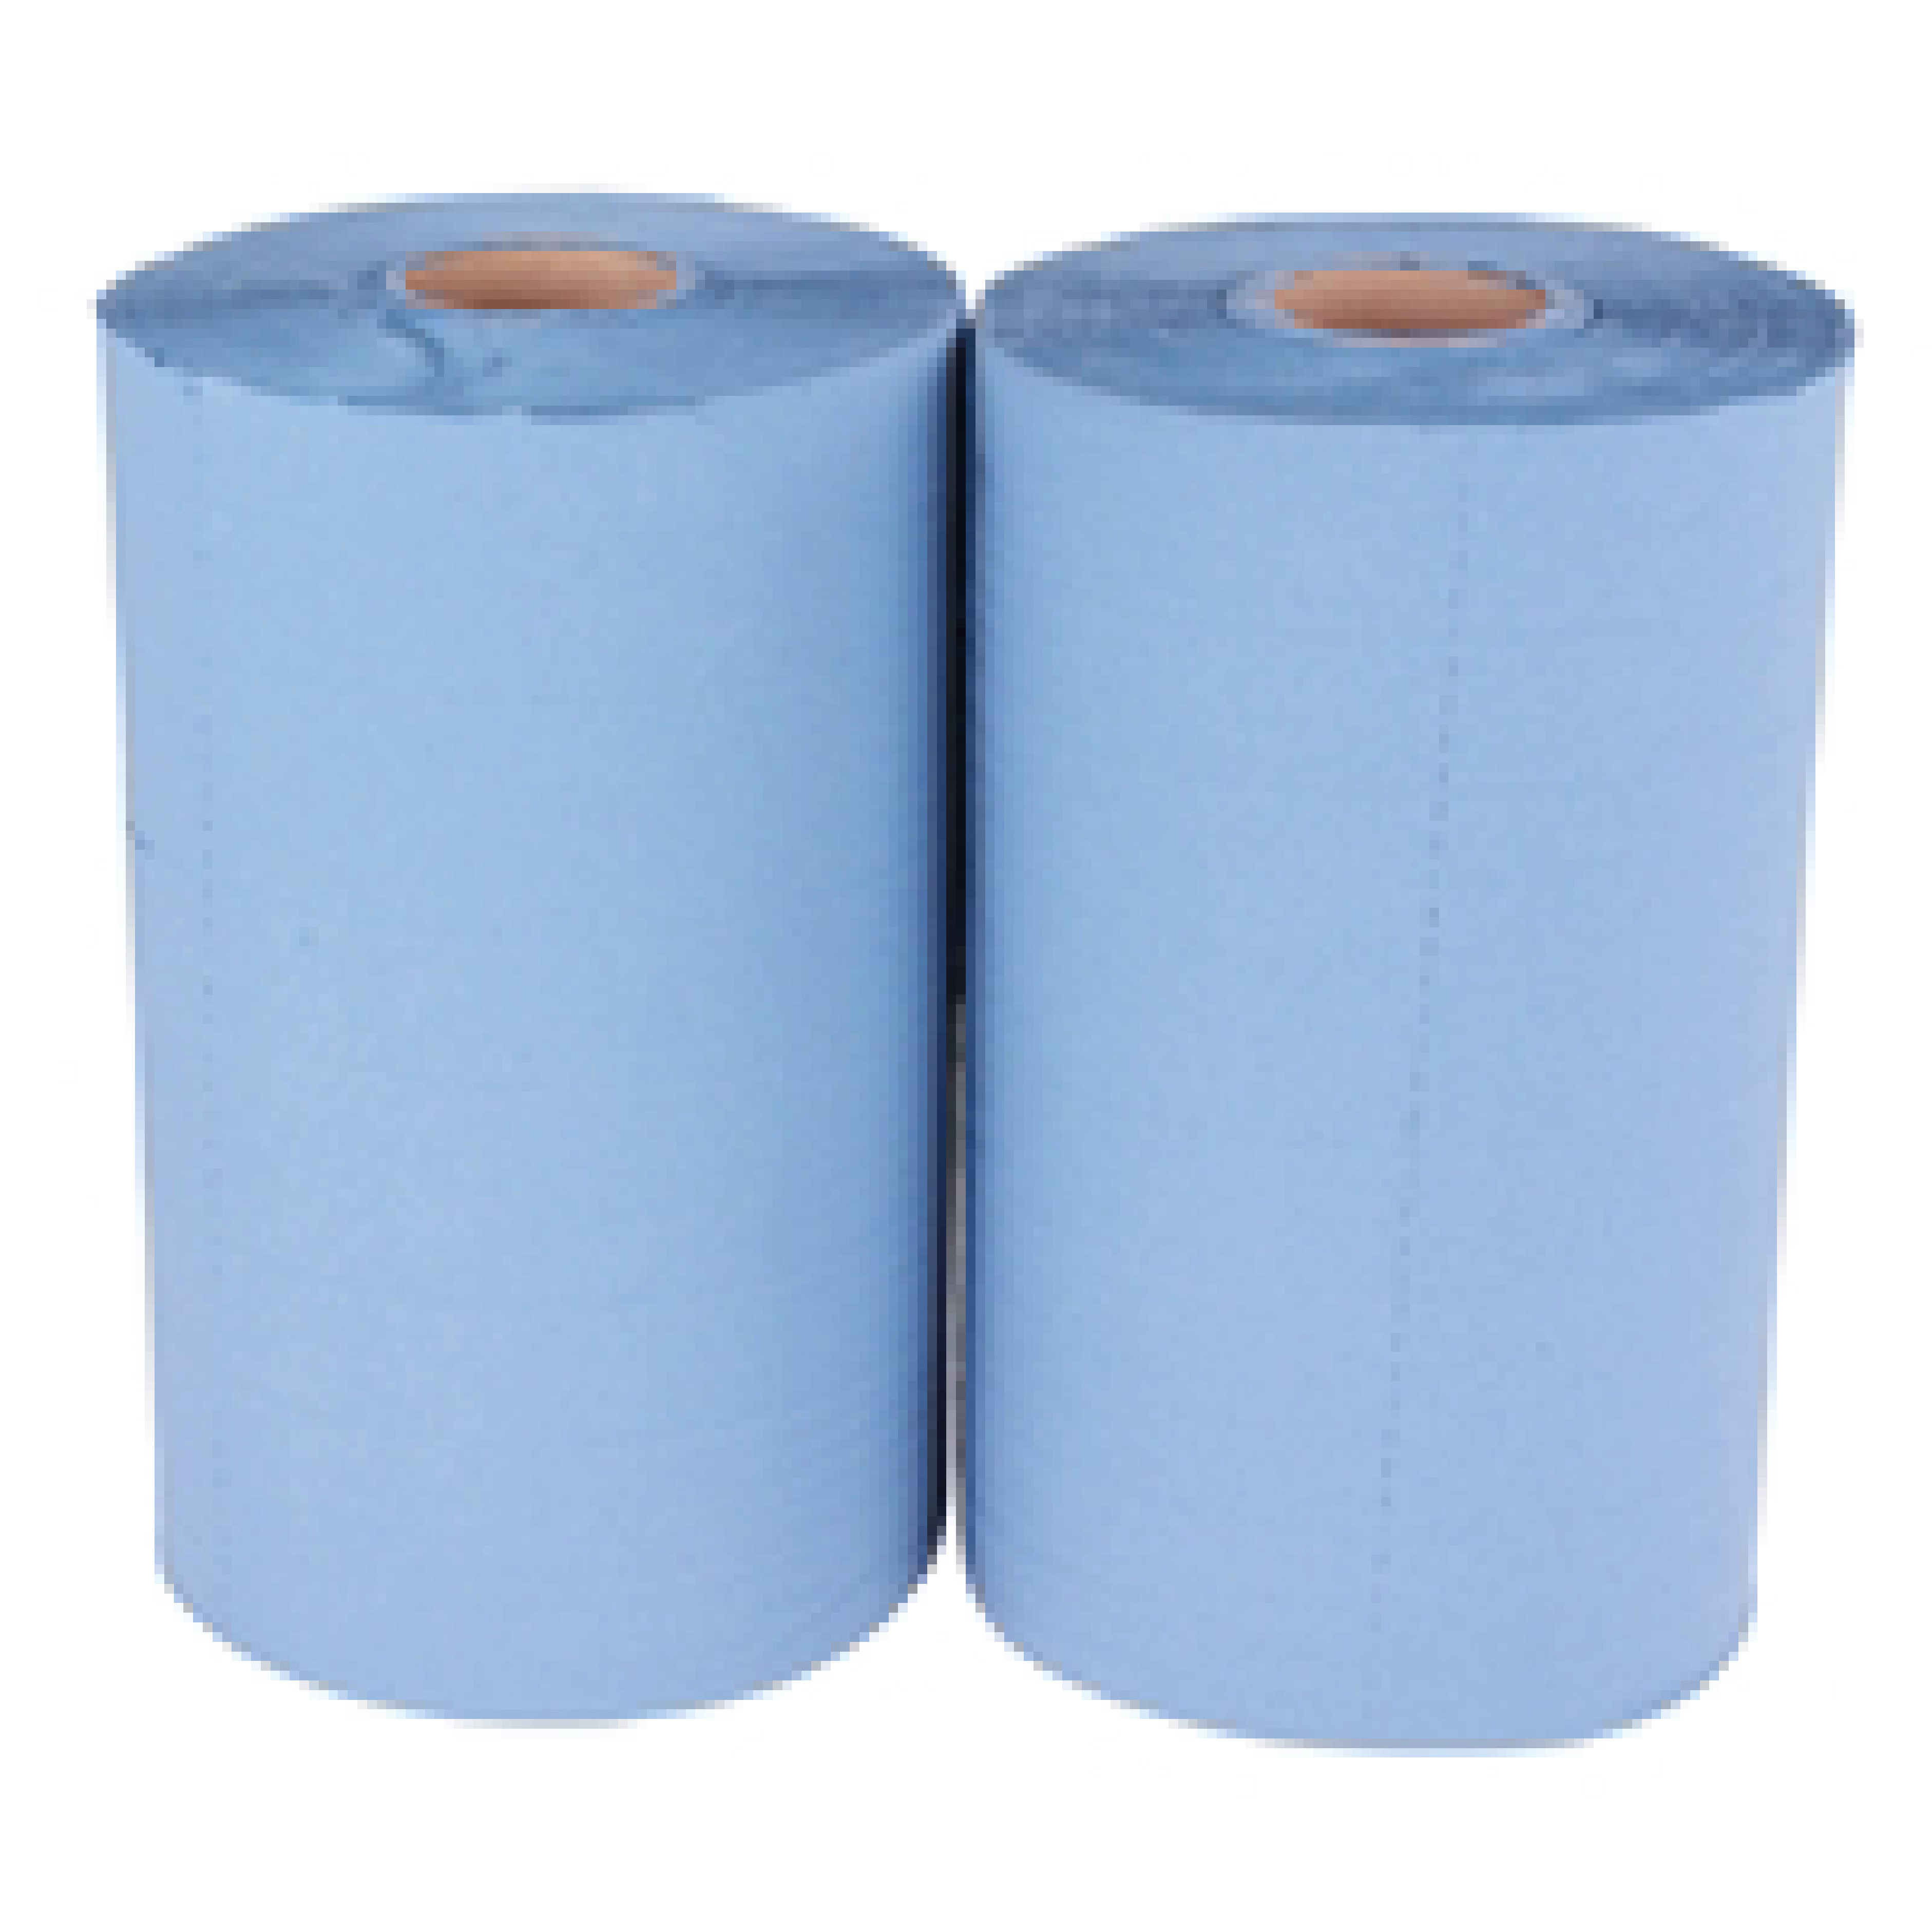 Handtuchpapier-Rollen in Blau